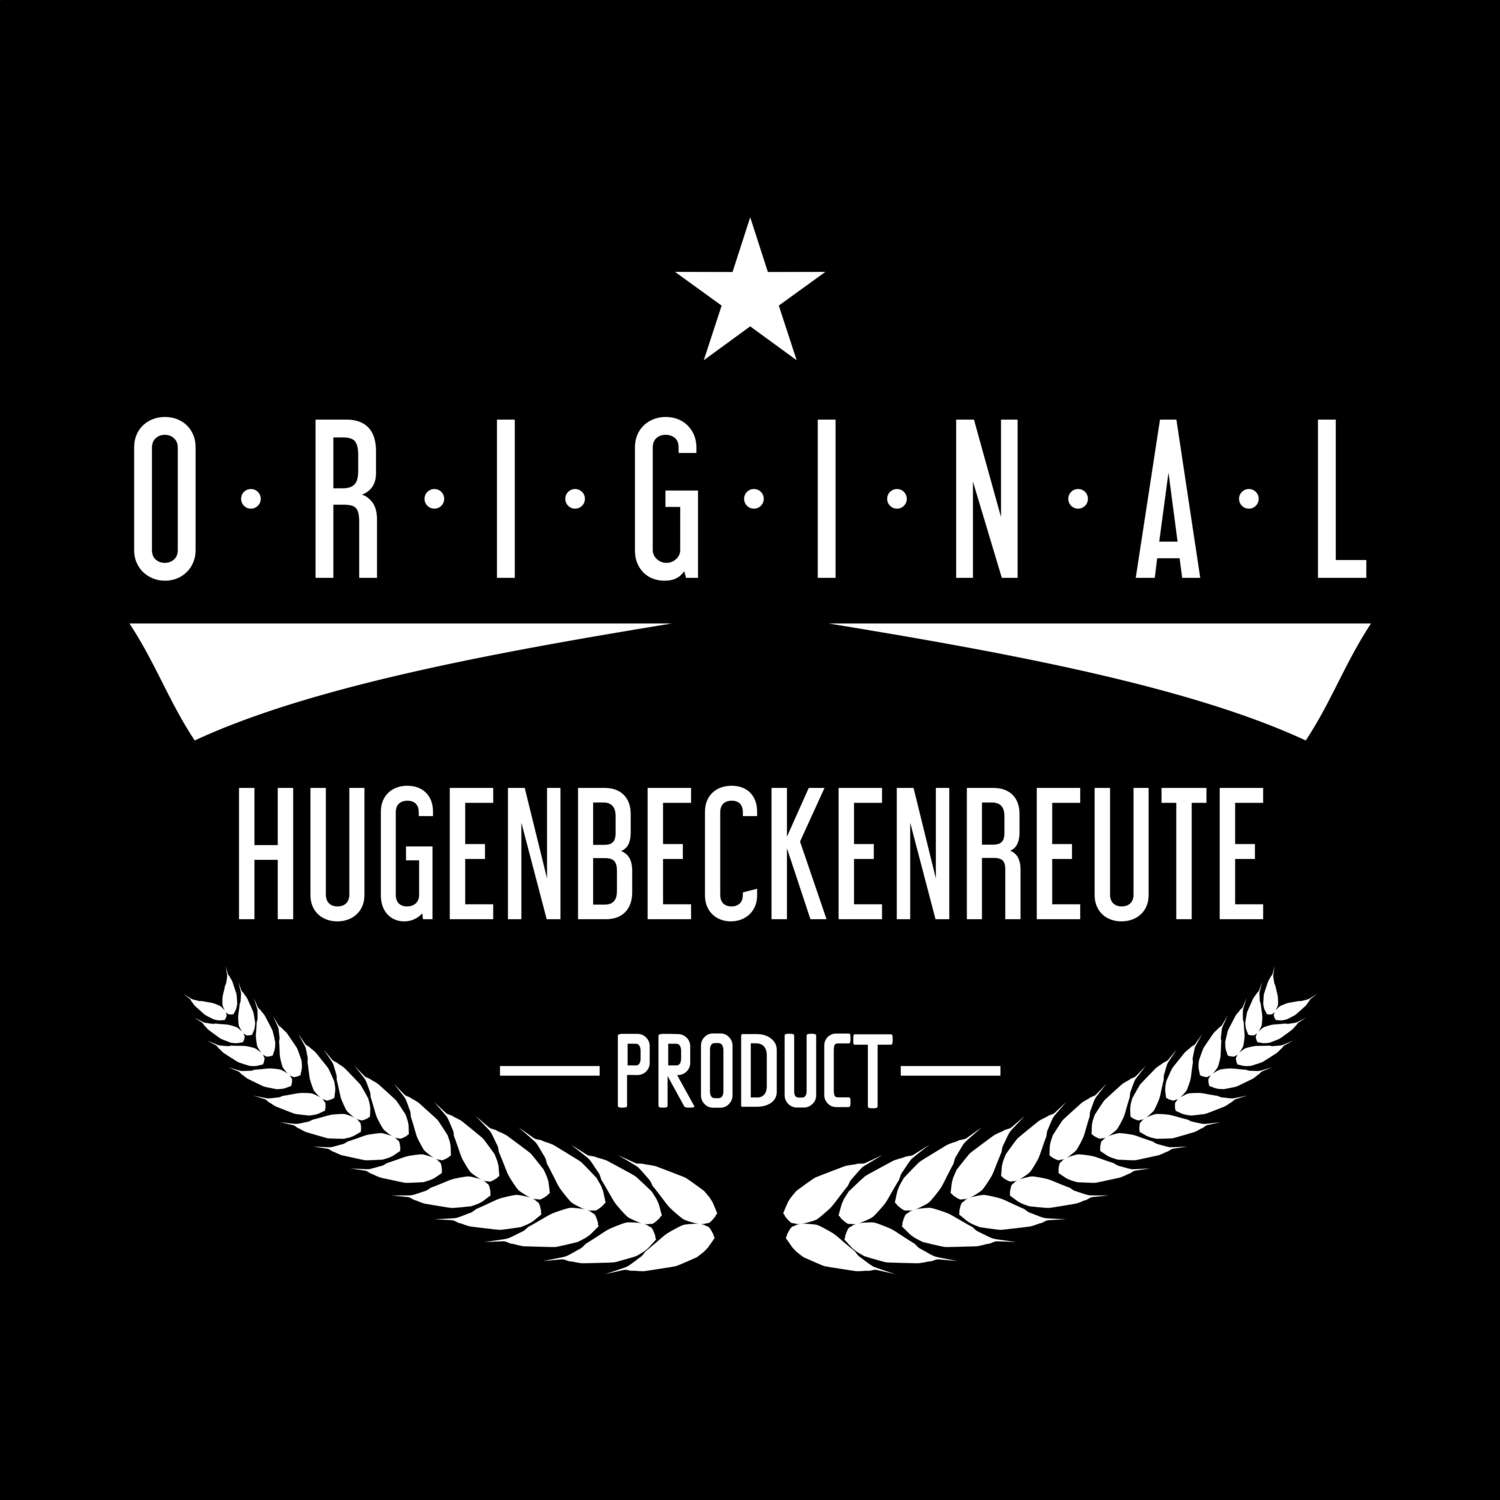 Hugenbeckenreute T-Shirt »Original Product«